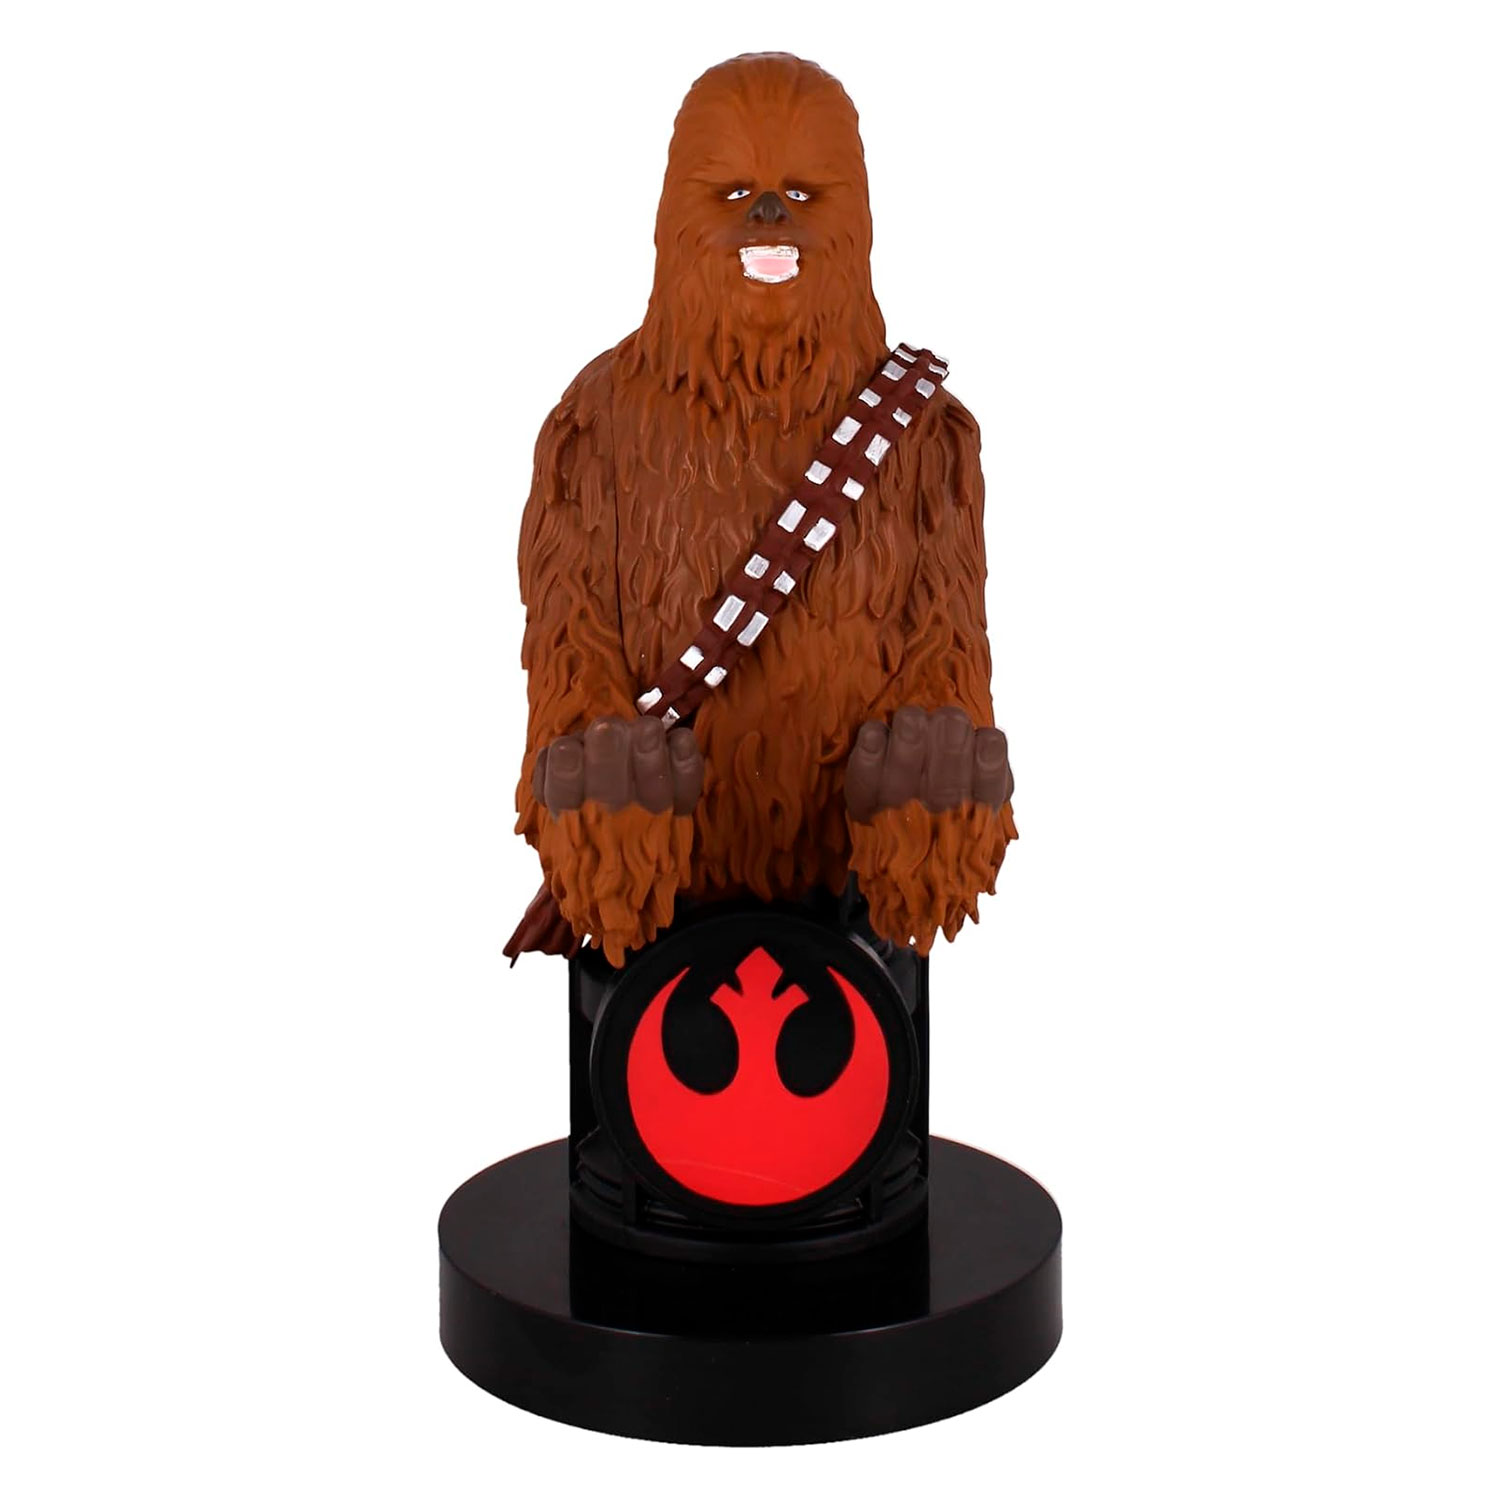 Suporte Cable Guys Star Wars Chewbacca para Controle e Smartphone